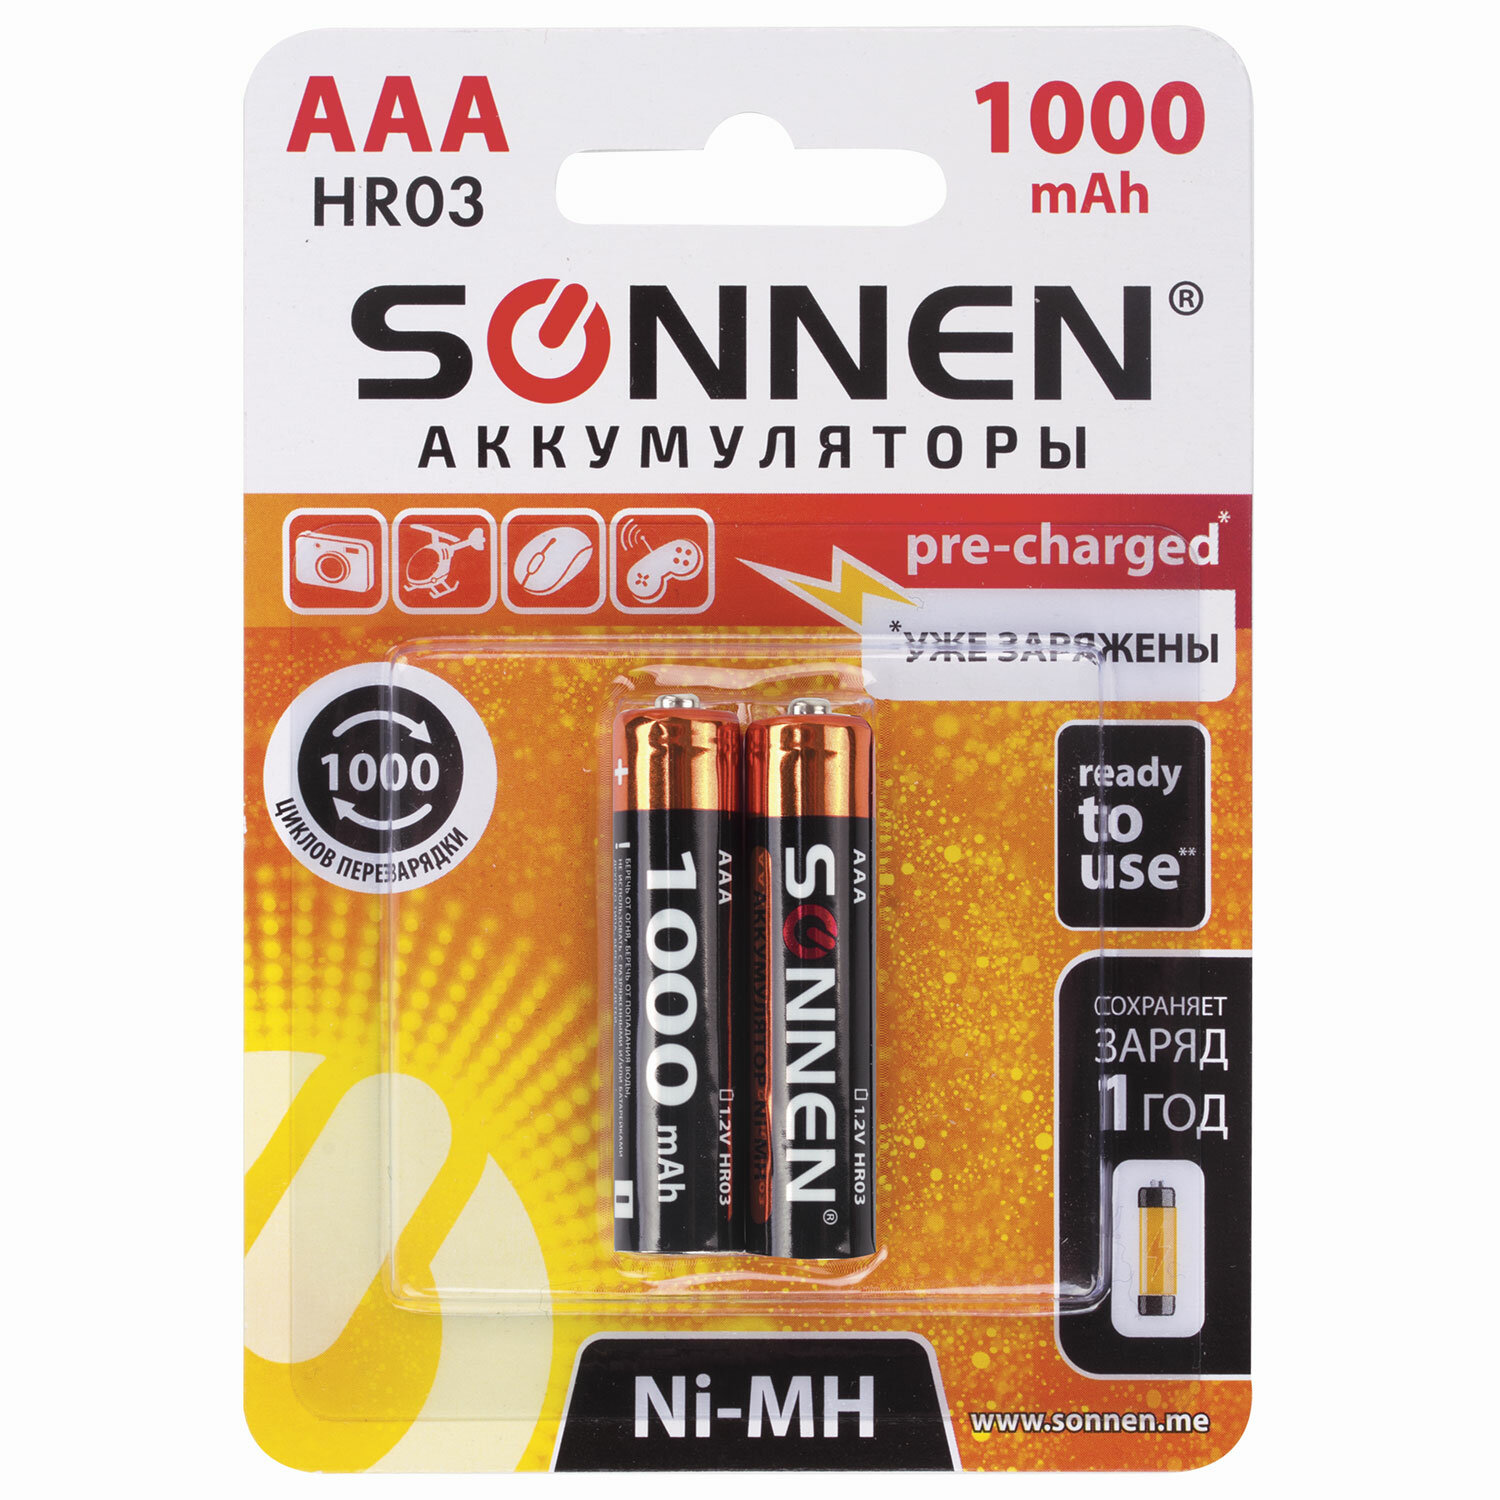 Батарейки аккумуляторные КОМПЛЕКТ 2 шт., SONNEN, AAA (HR03), Ni-Mh, 1000 mAh